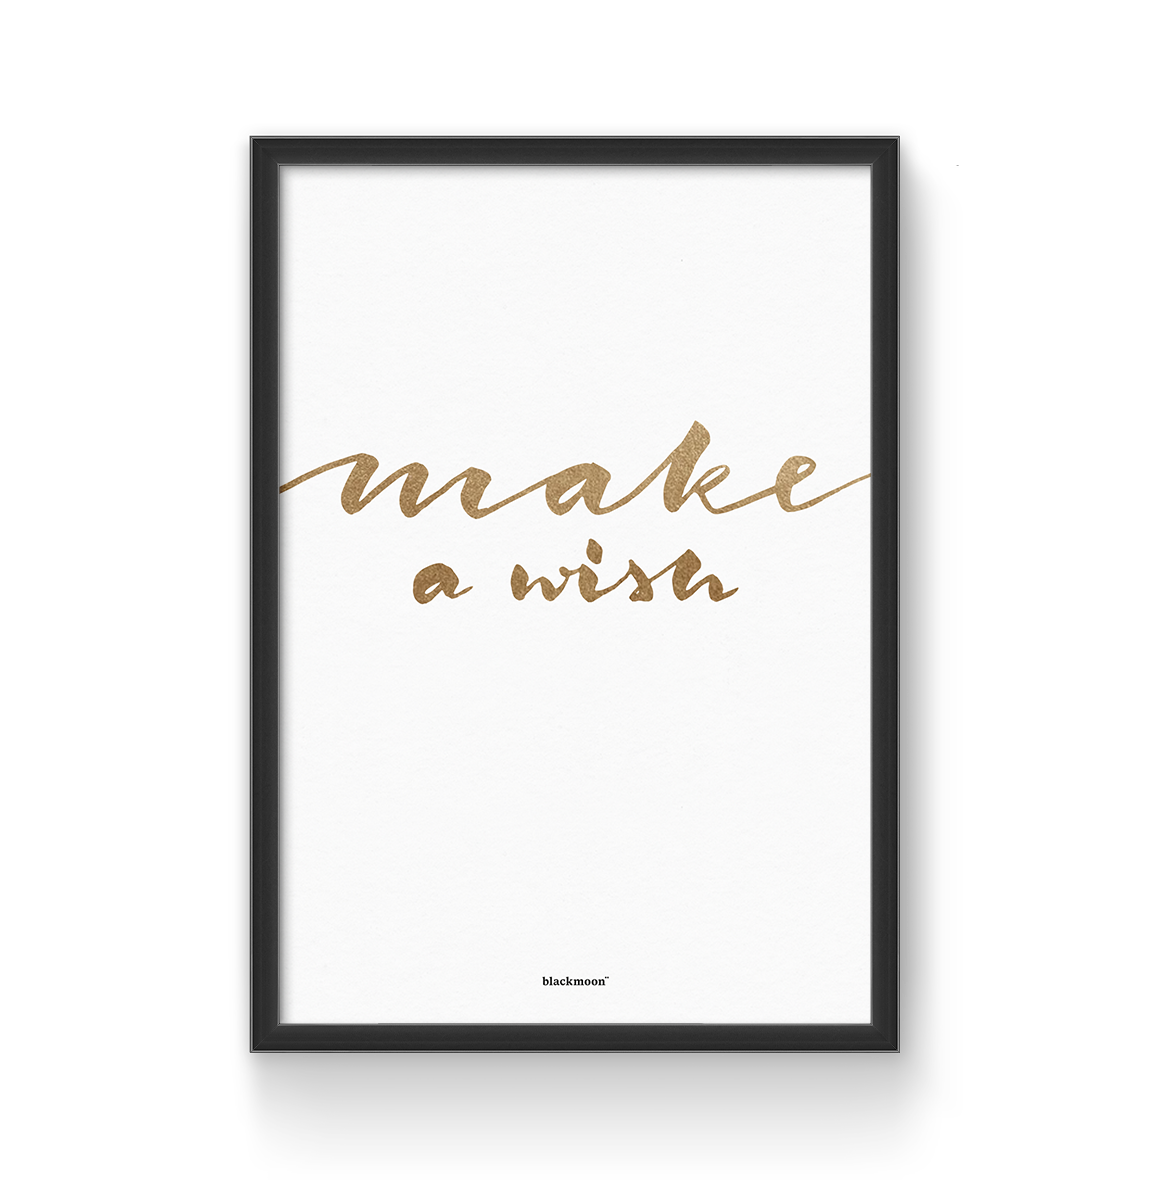 Art Print "Make a wish"